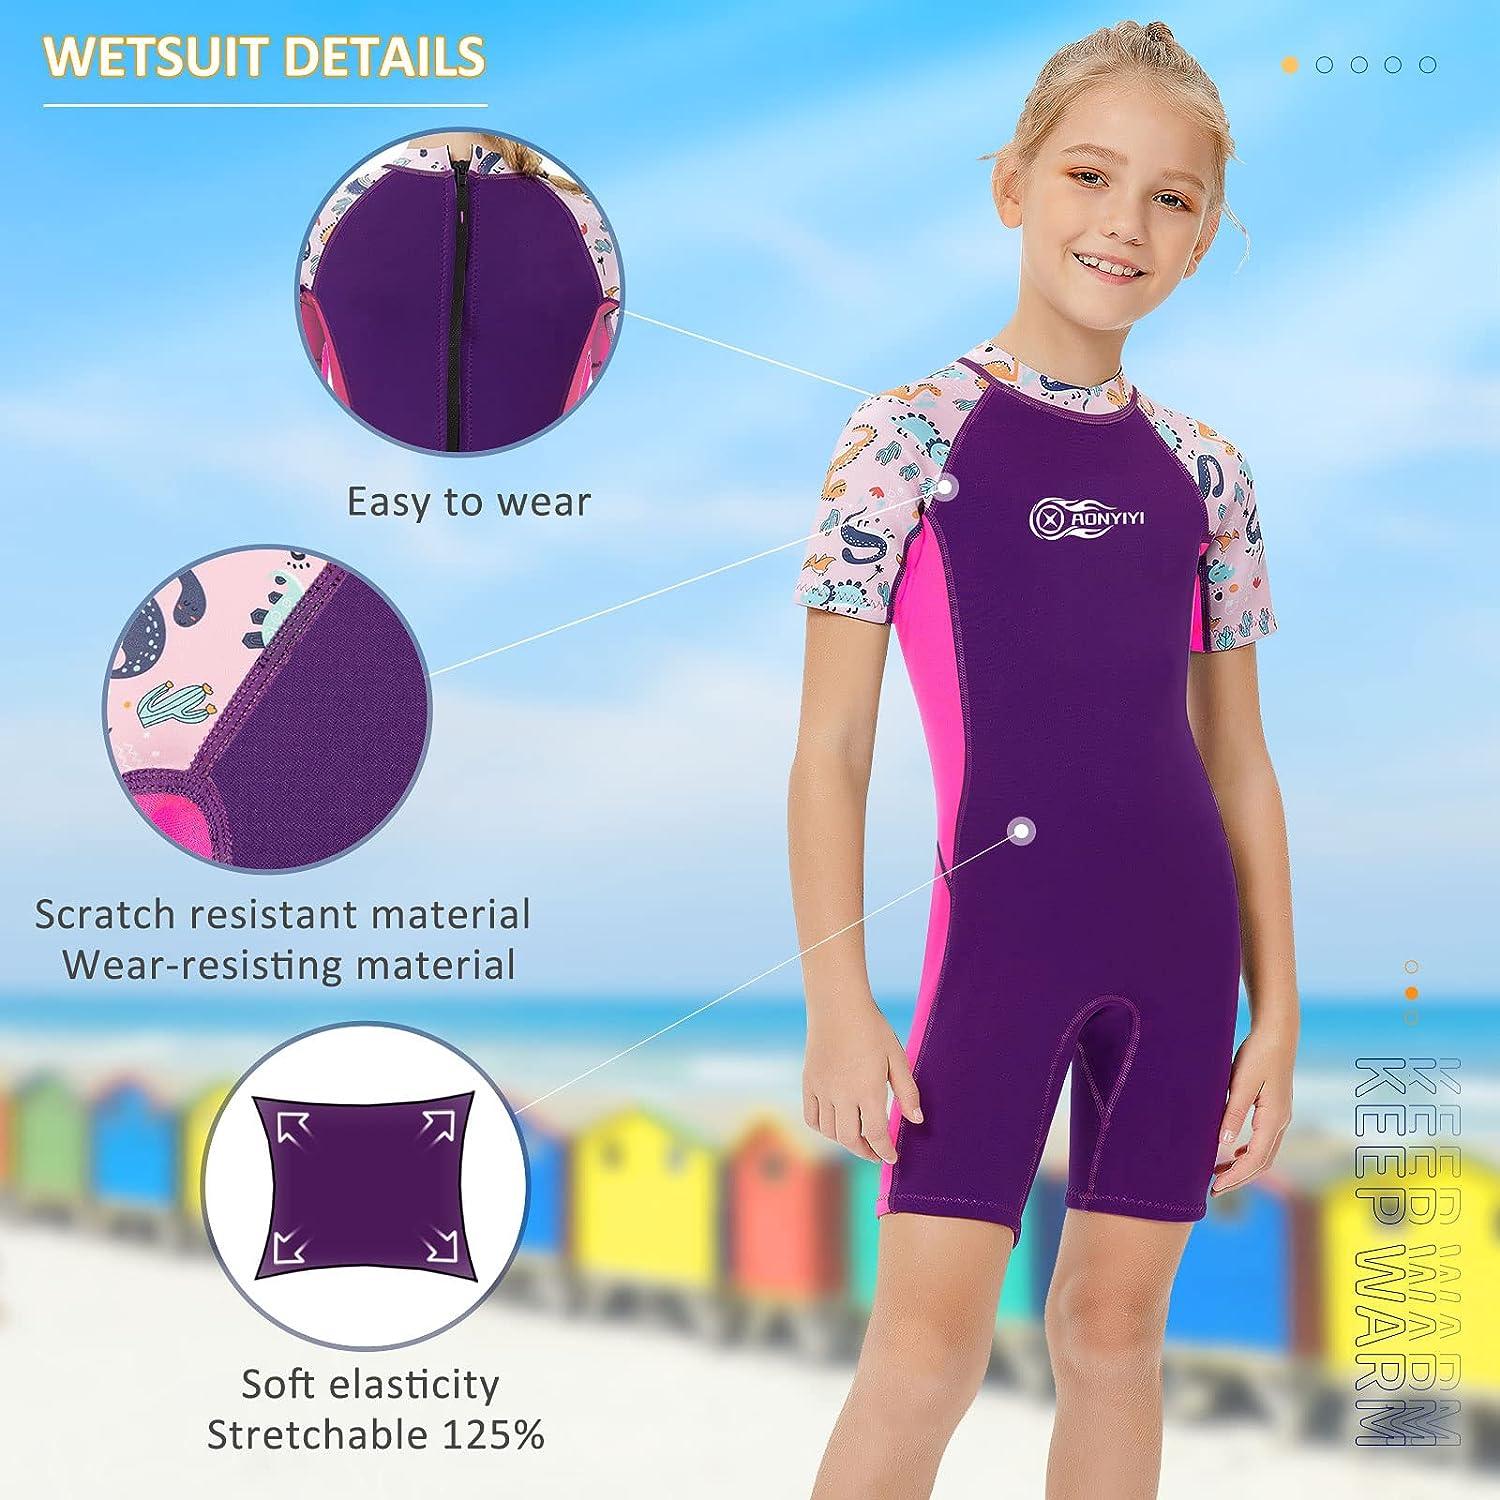 Kids Wetsuit 2.5mm Neoprene Nylon Thermal Swimsuit, Full Body Surf Suit for  Girls Boys and , Wet Suit Swimming - Green S